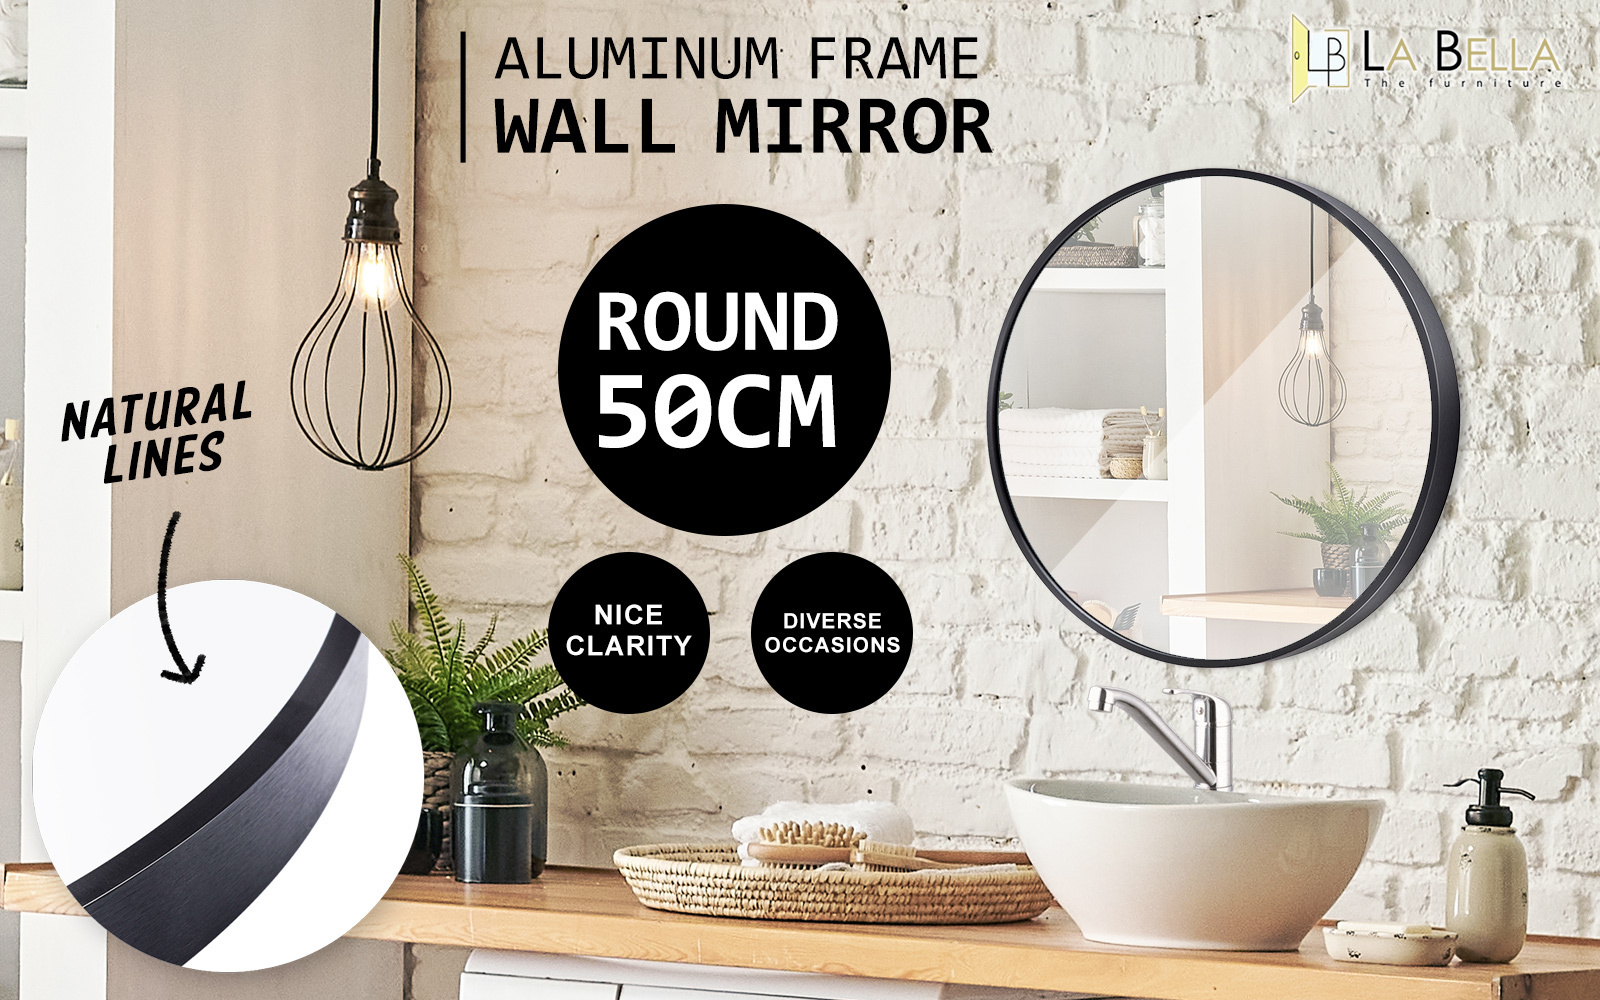 La Bella Wall Mirror Round Aluminum Frame Makeup Decor Bathroom Vanity